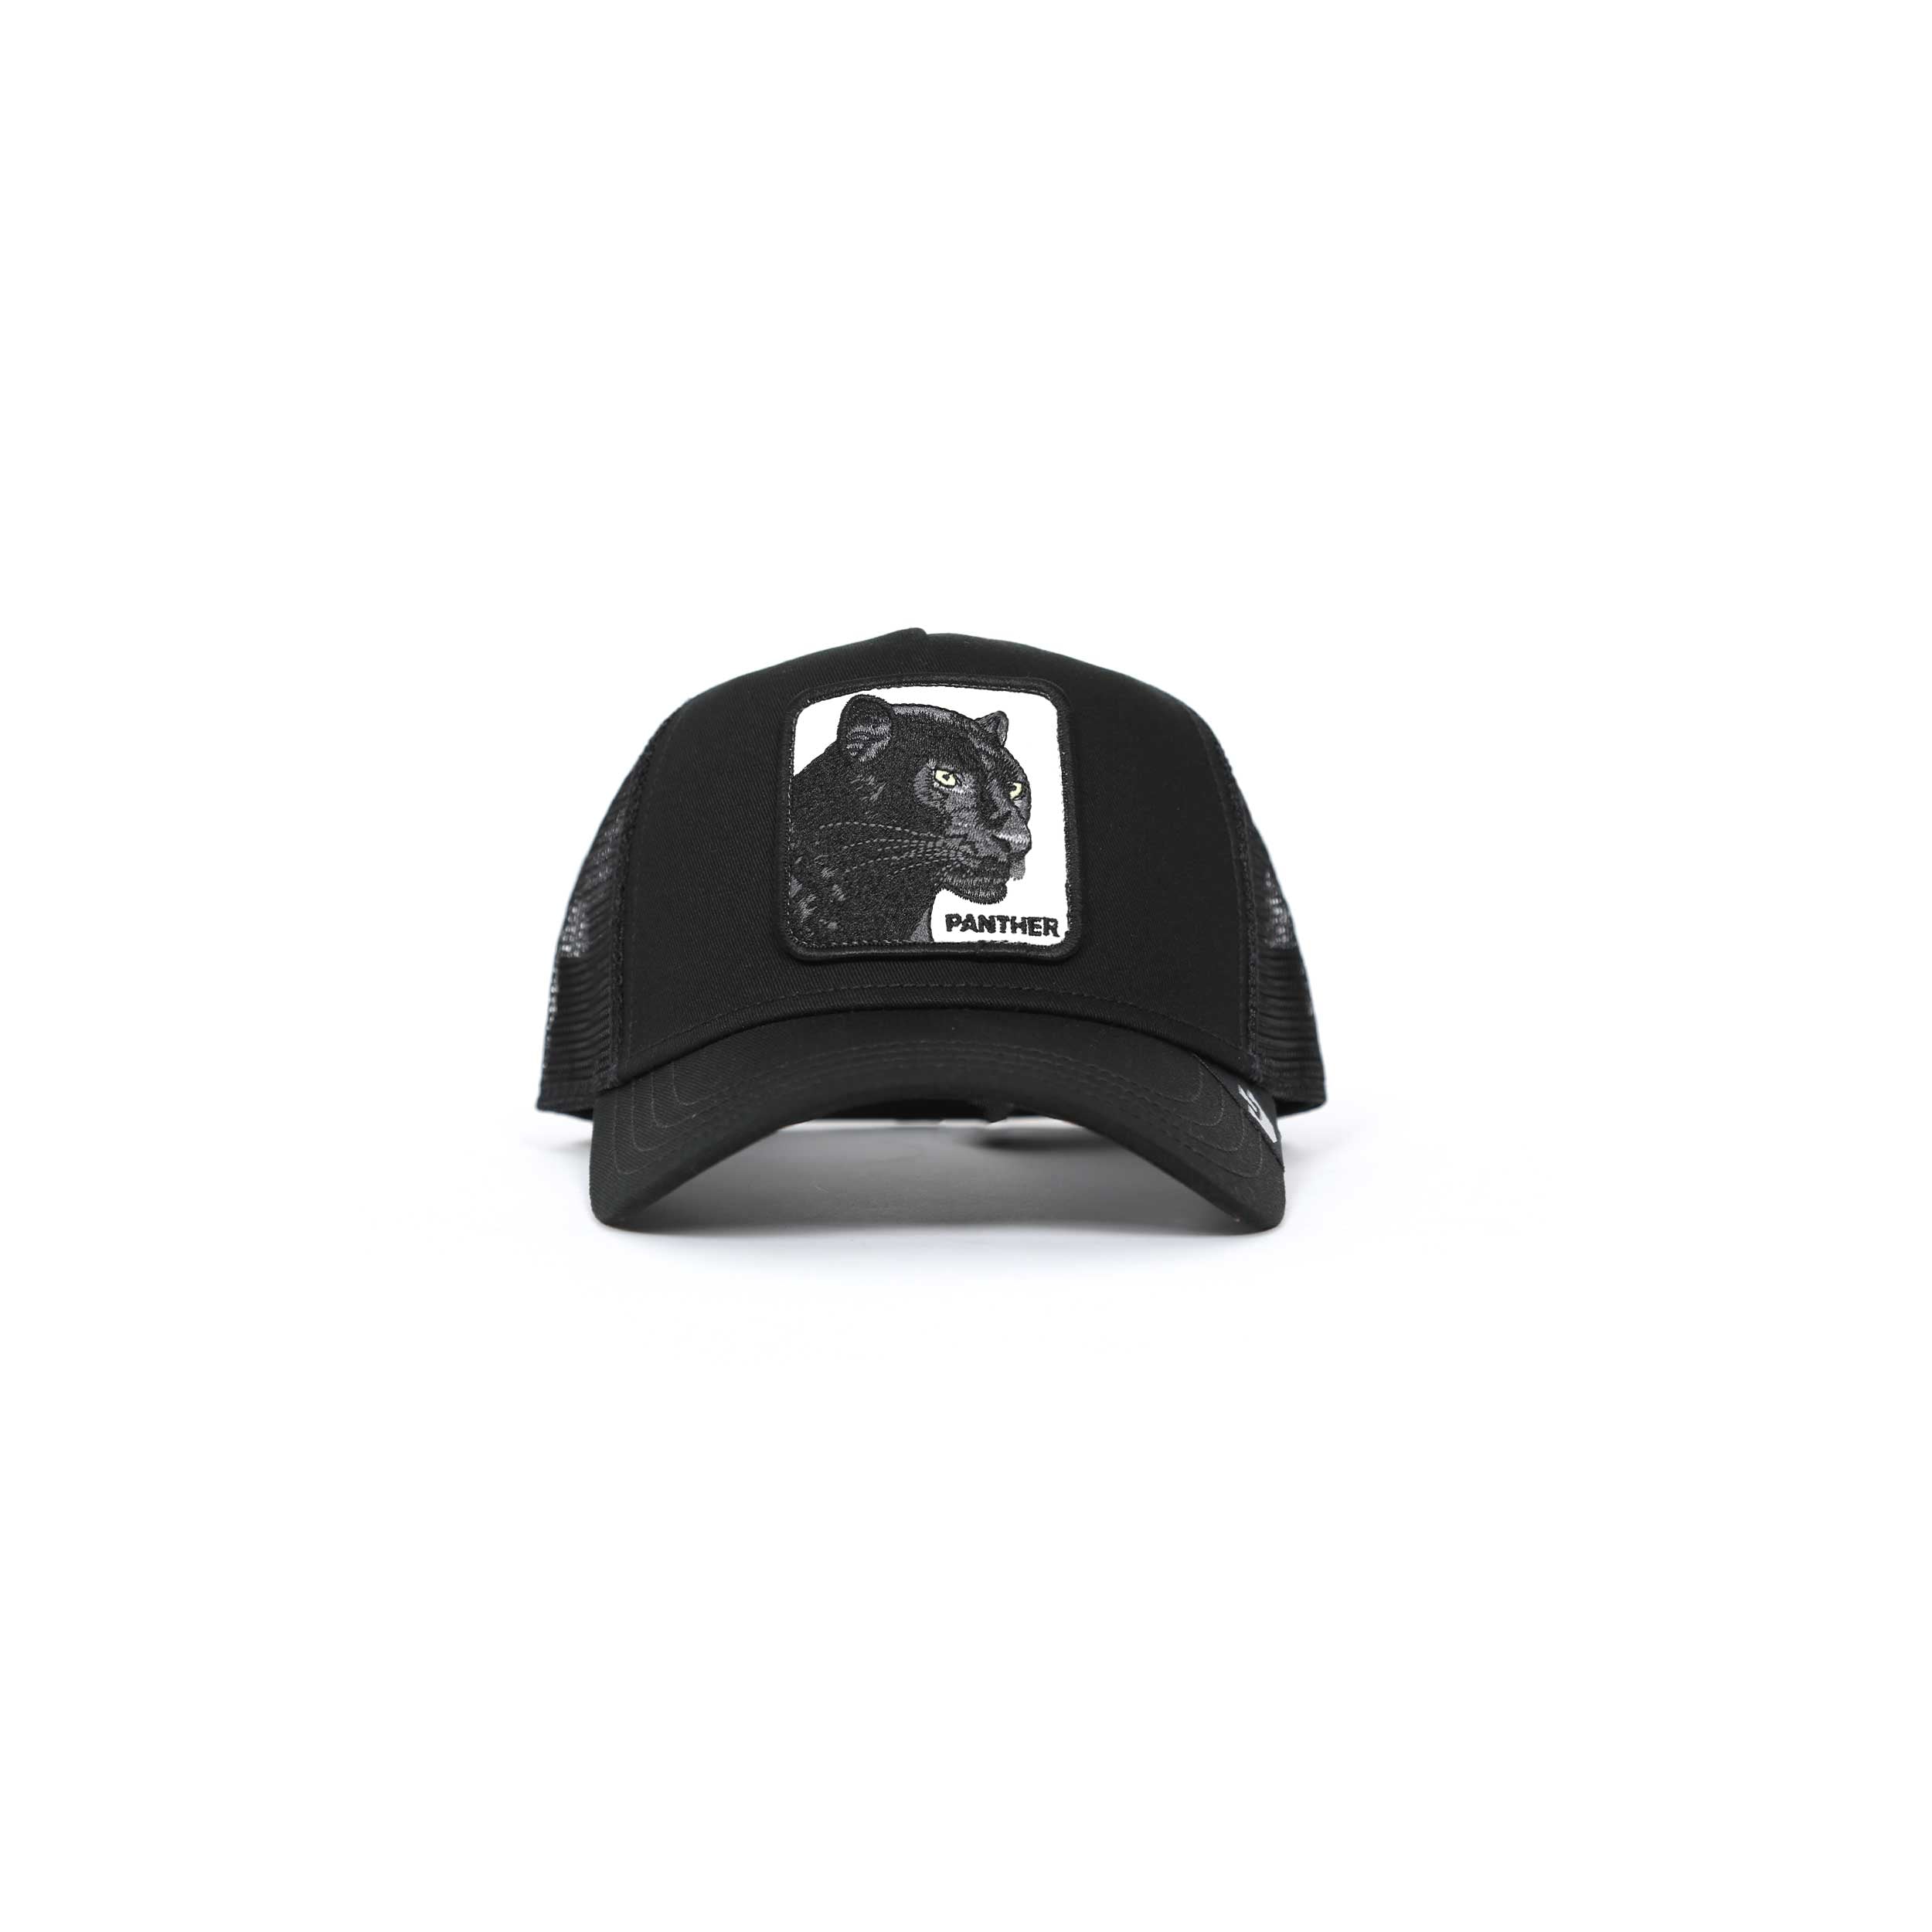 Goorin Bros The Panther Trucker Cap in Black